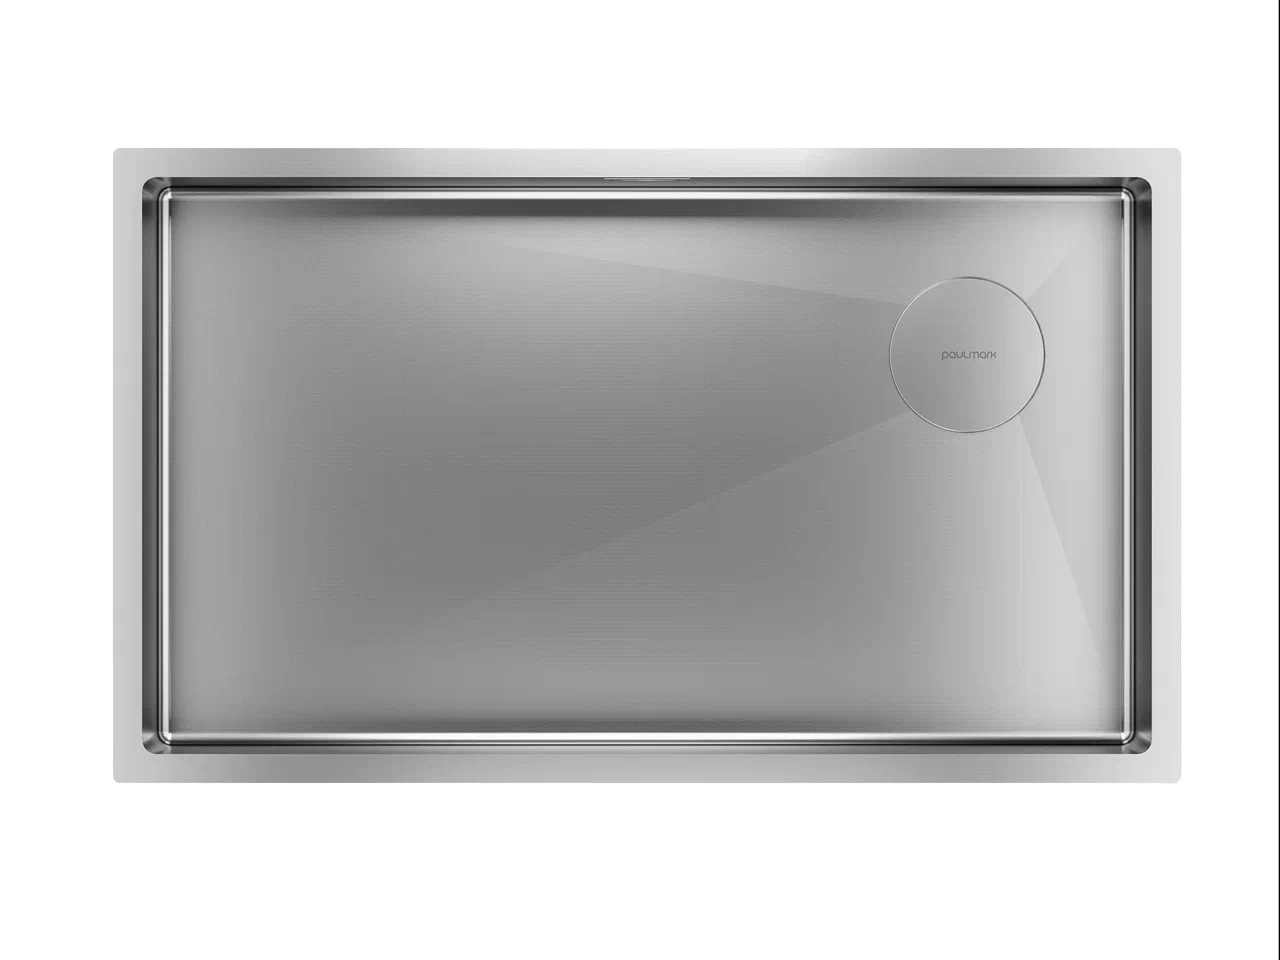 Кухонная мойка Paulmark Next-Skew 740 PM887444-BS брашированная сталь, цвет хром